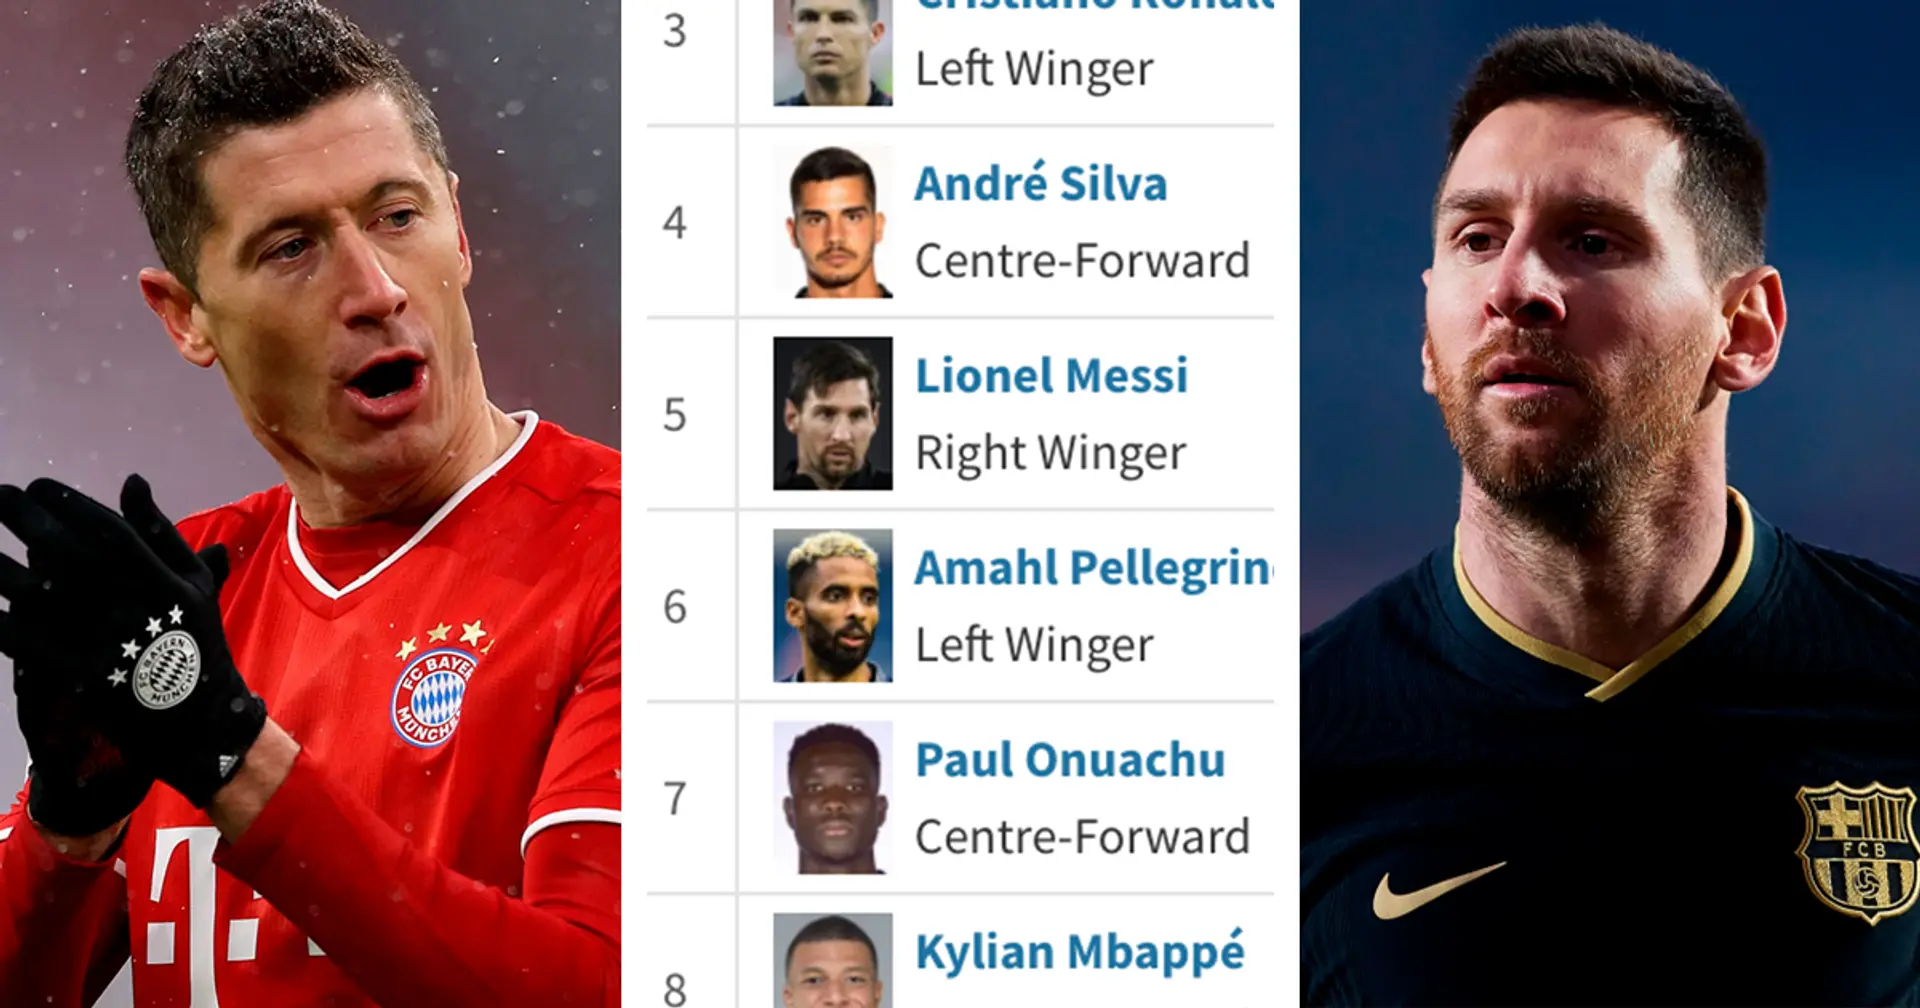 Lewandowski far ahead, Messi just 5th: 2021 Golden Boot ranking as it stands